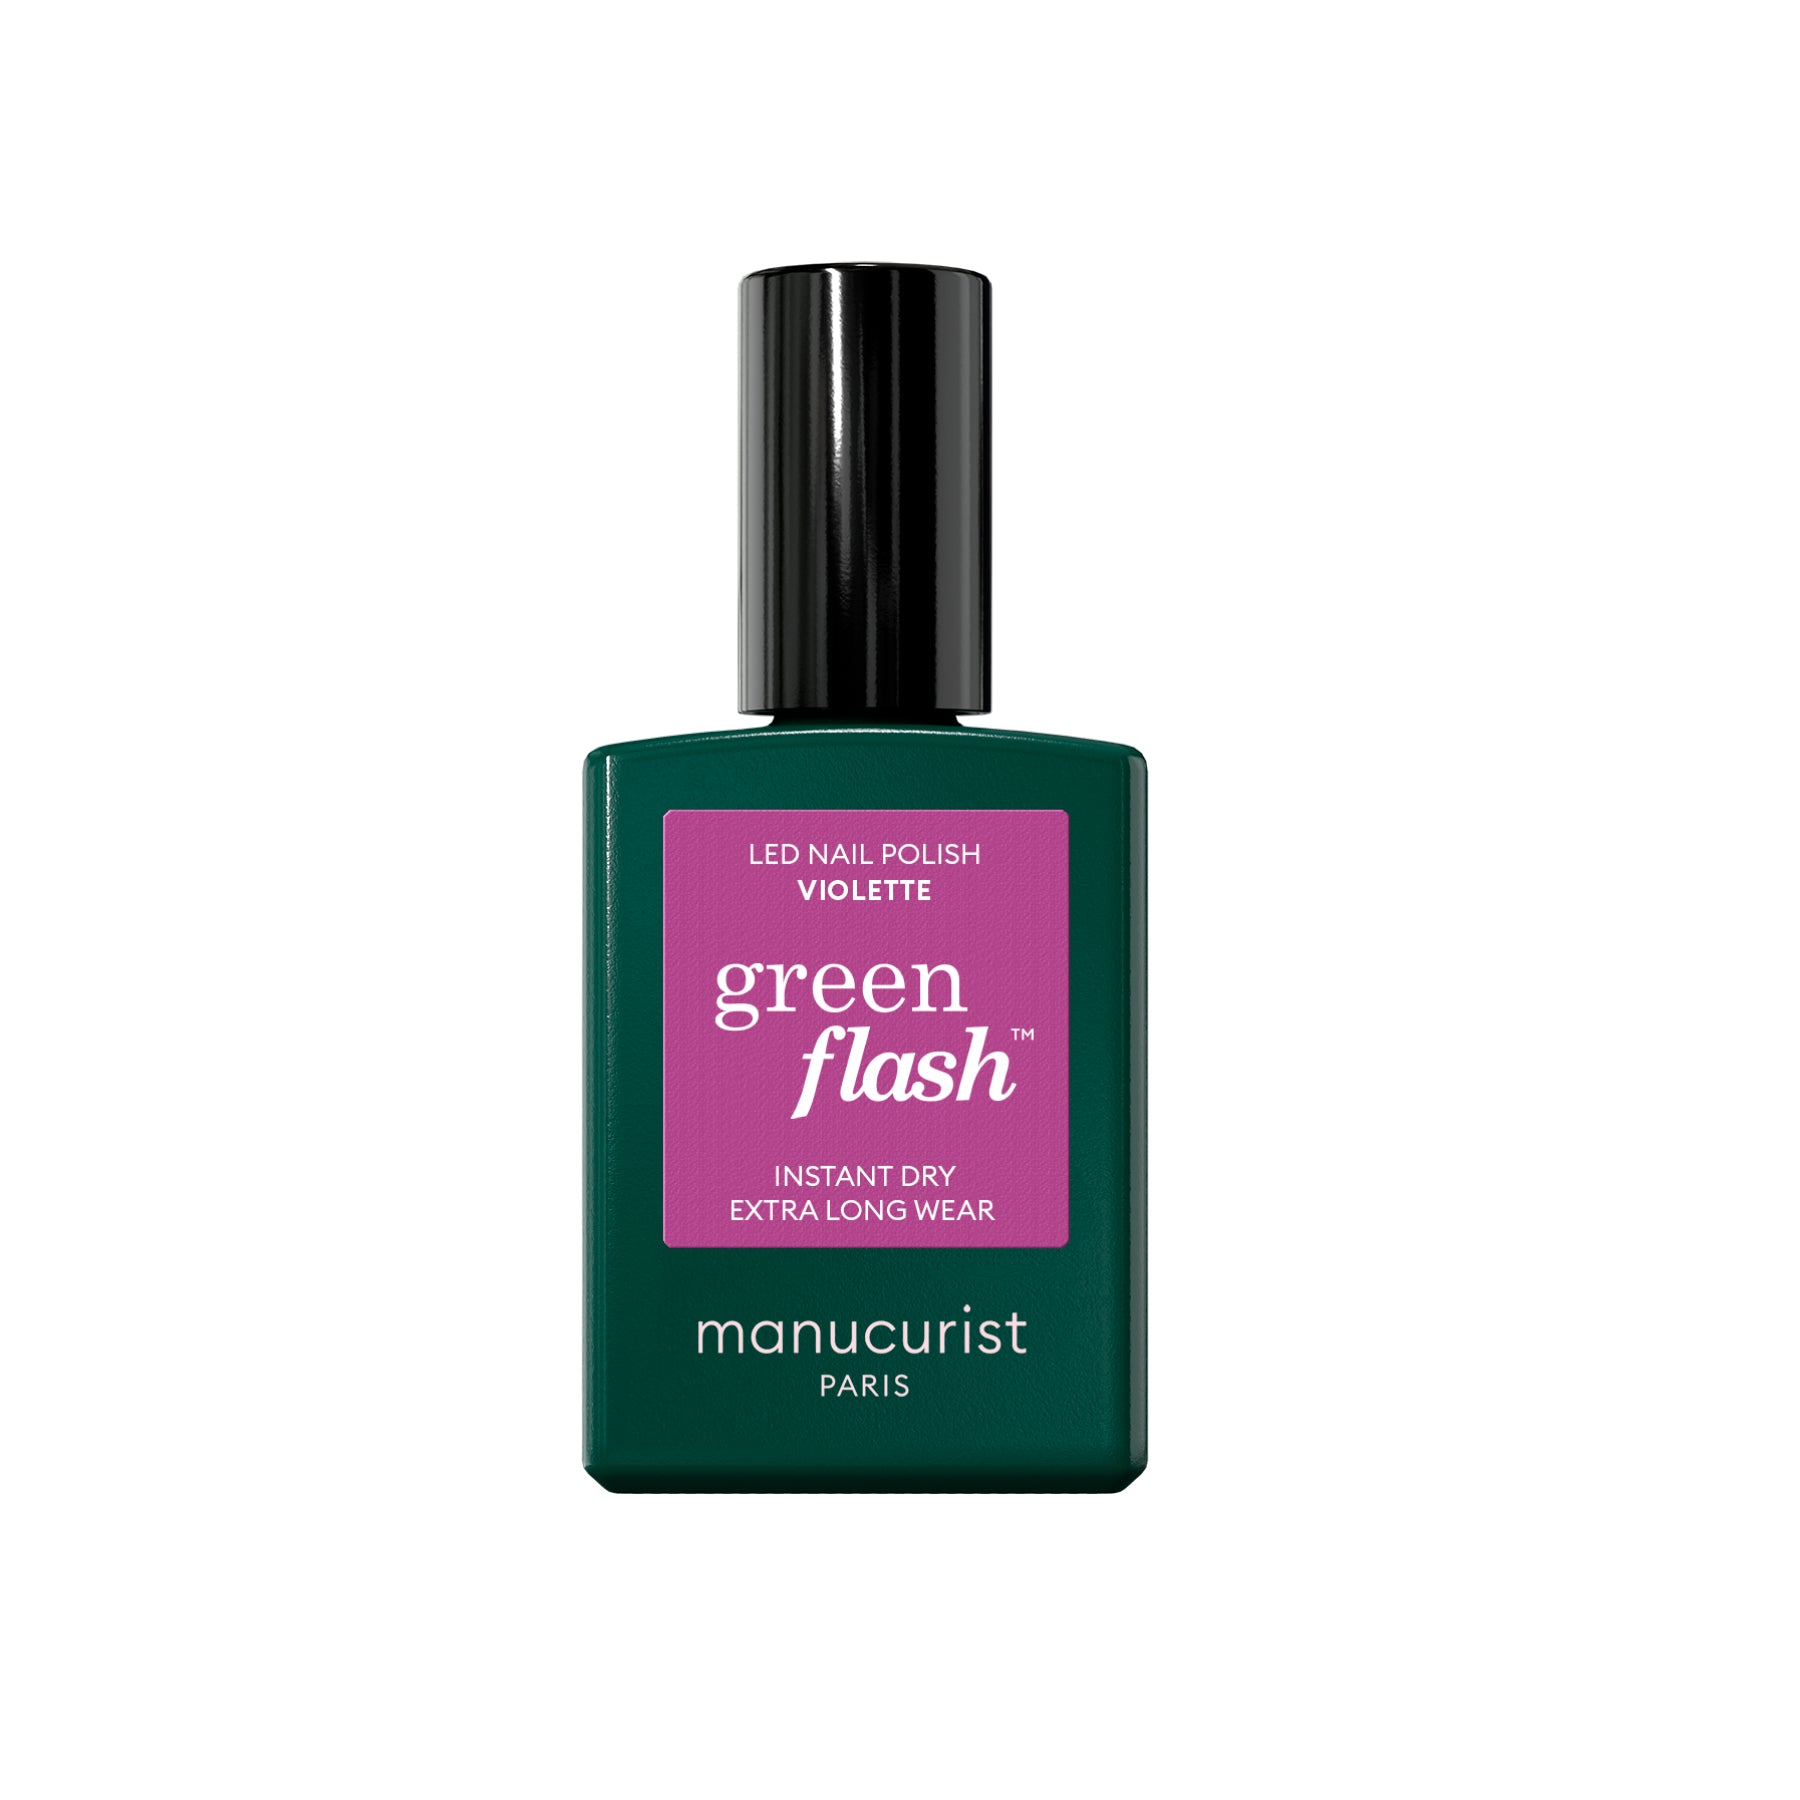 MANUCURIST Green Flash LED Nail Polish Violette